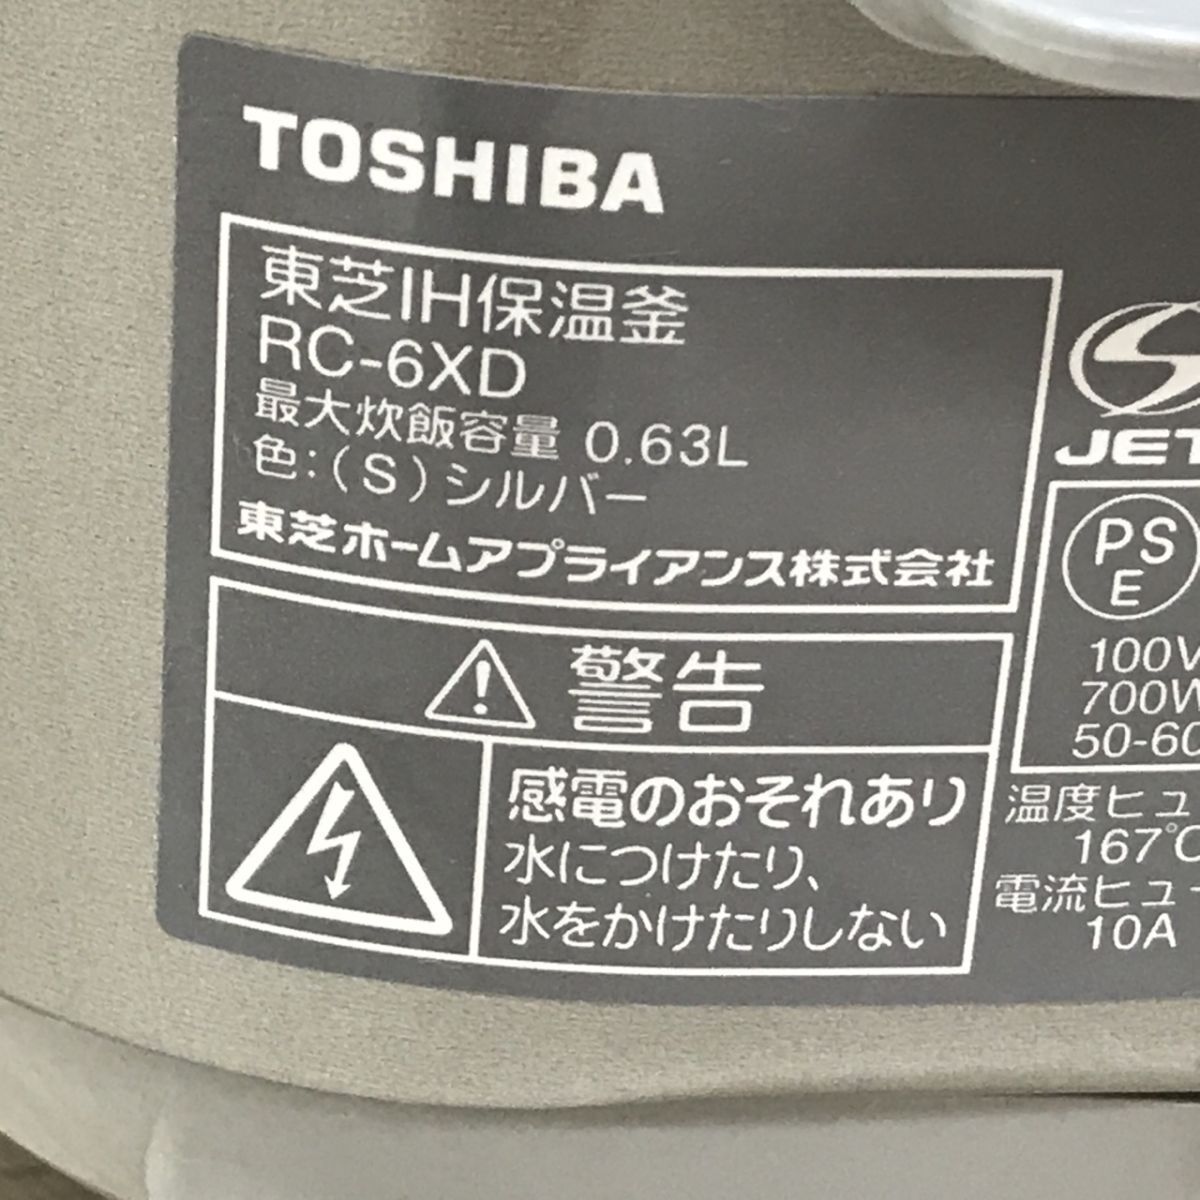 TOSHIBA 東芝 IH 炊飯器 RC-6XD 3.5合 シルバー [C3870]の画像10